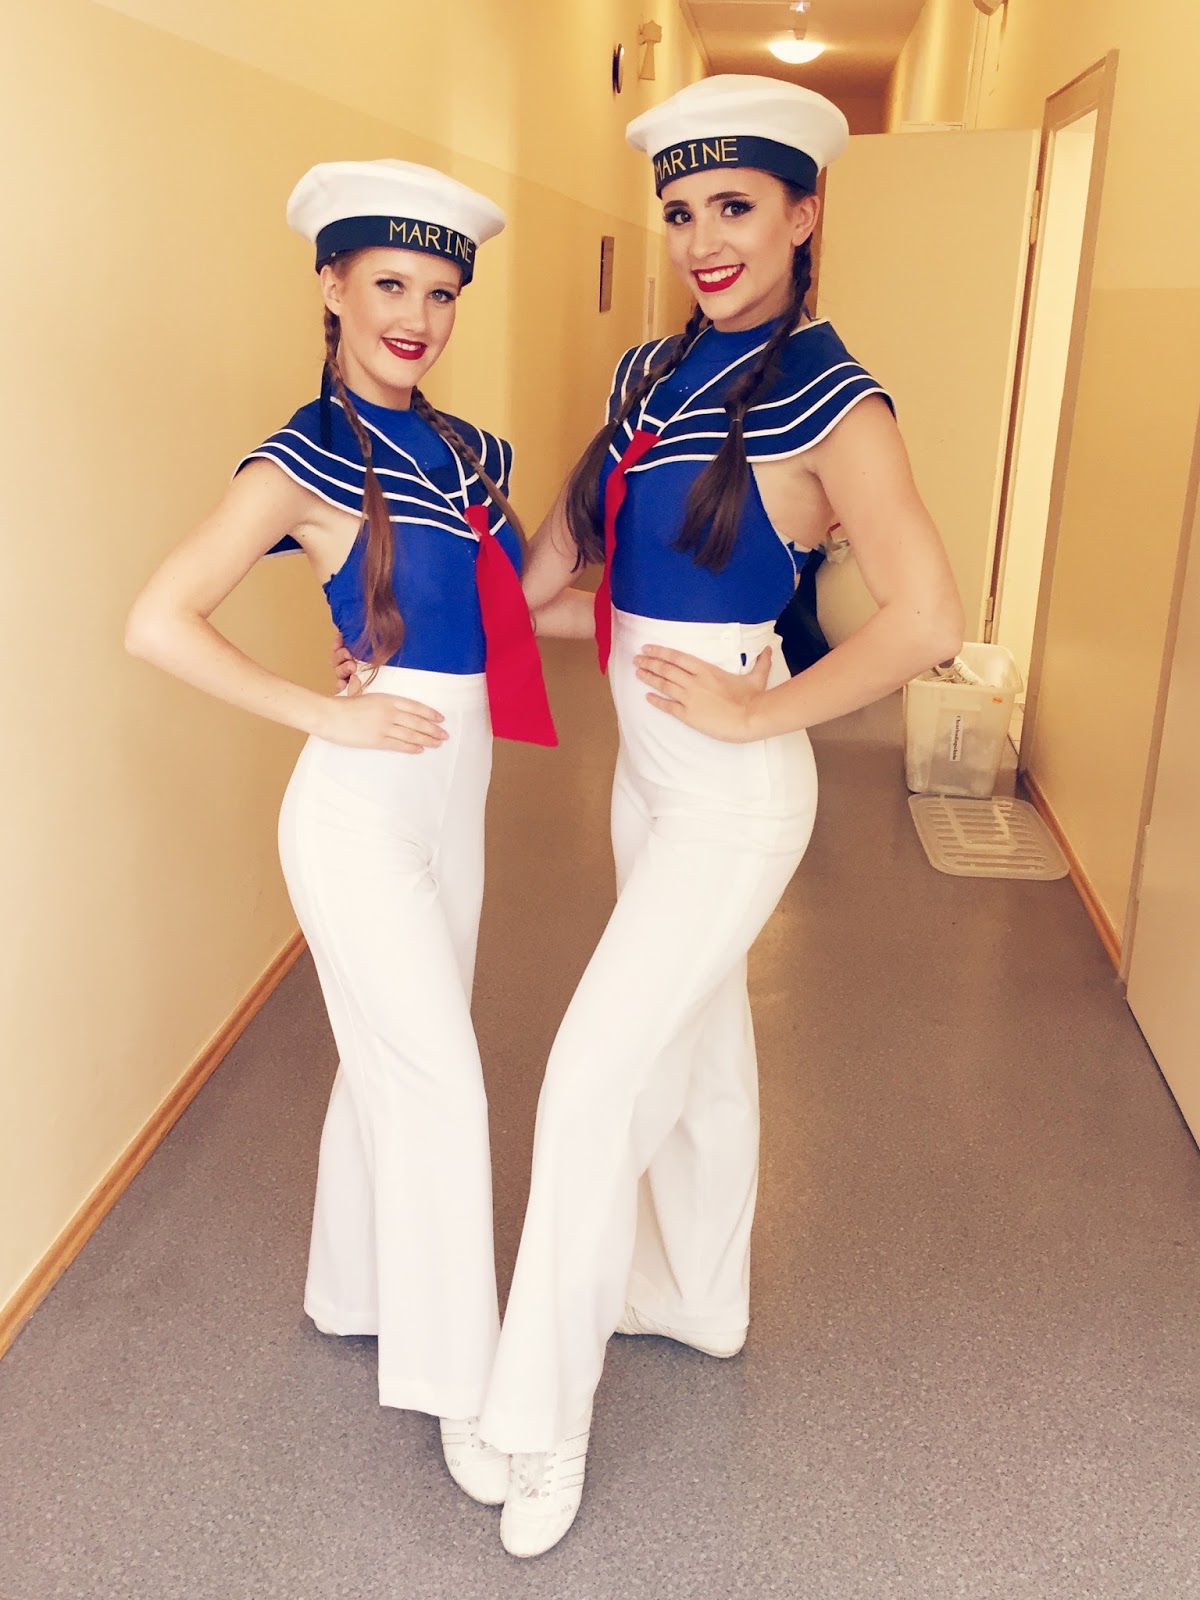 Dancers-sailor-marine-dance-karo-dancers-best-friends